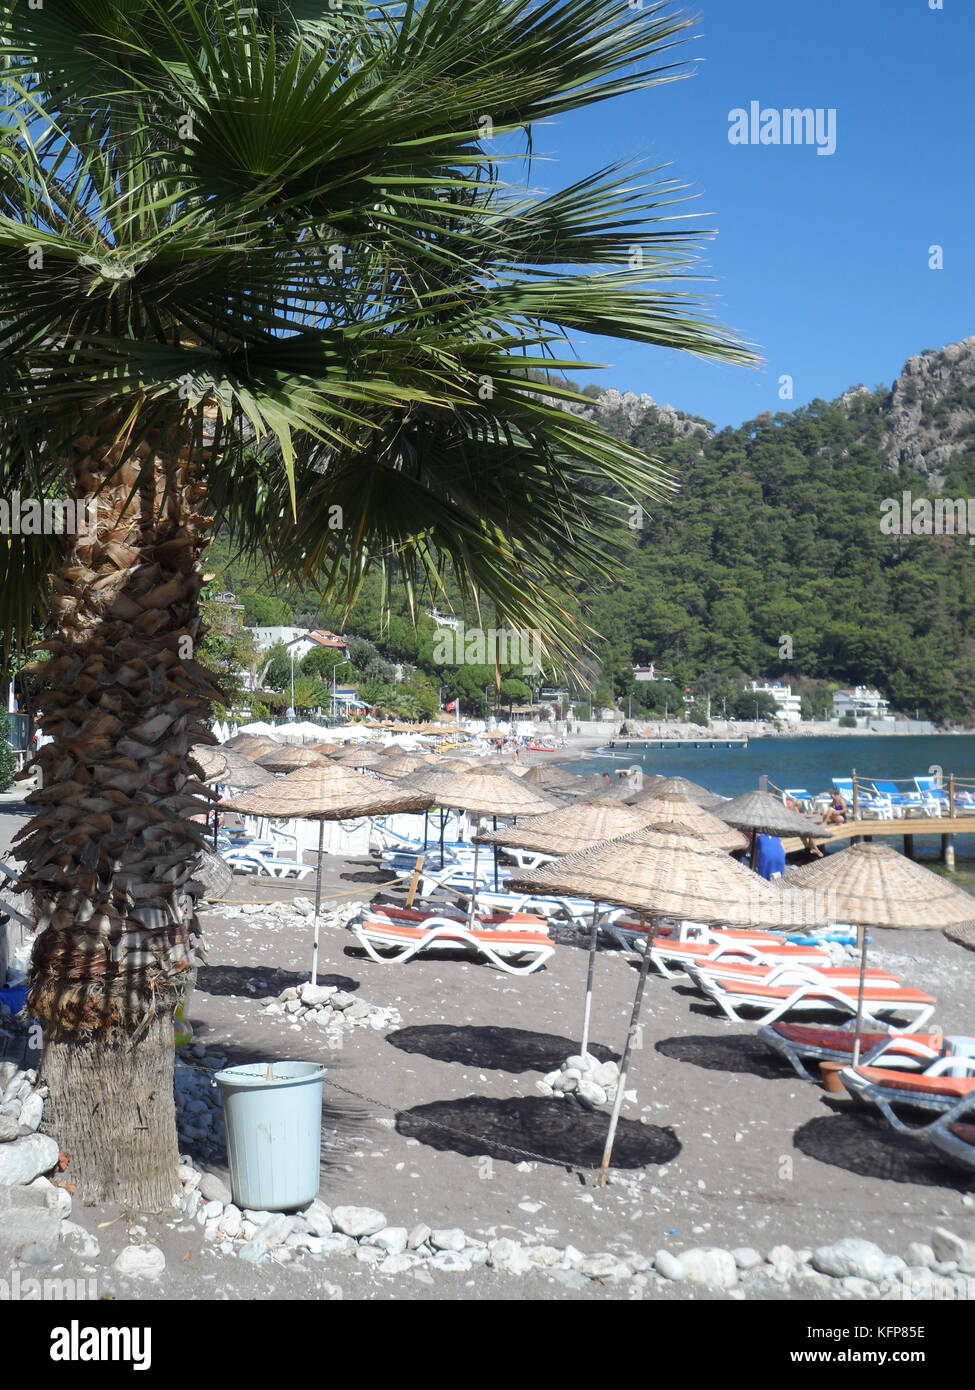 Public beach at the coastal village of Turunc, Turkey, Europe Stock Photo